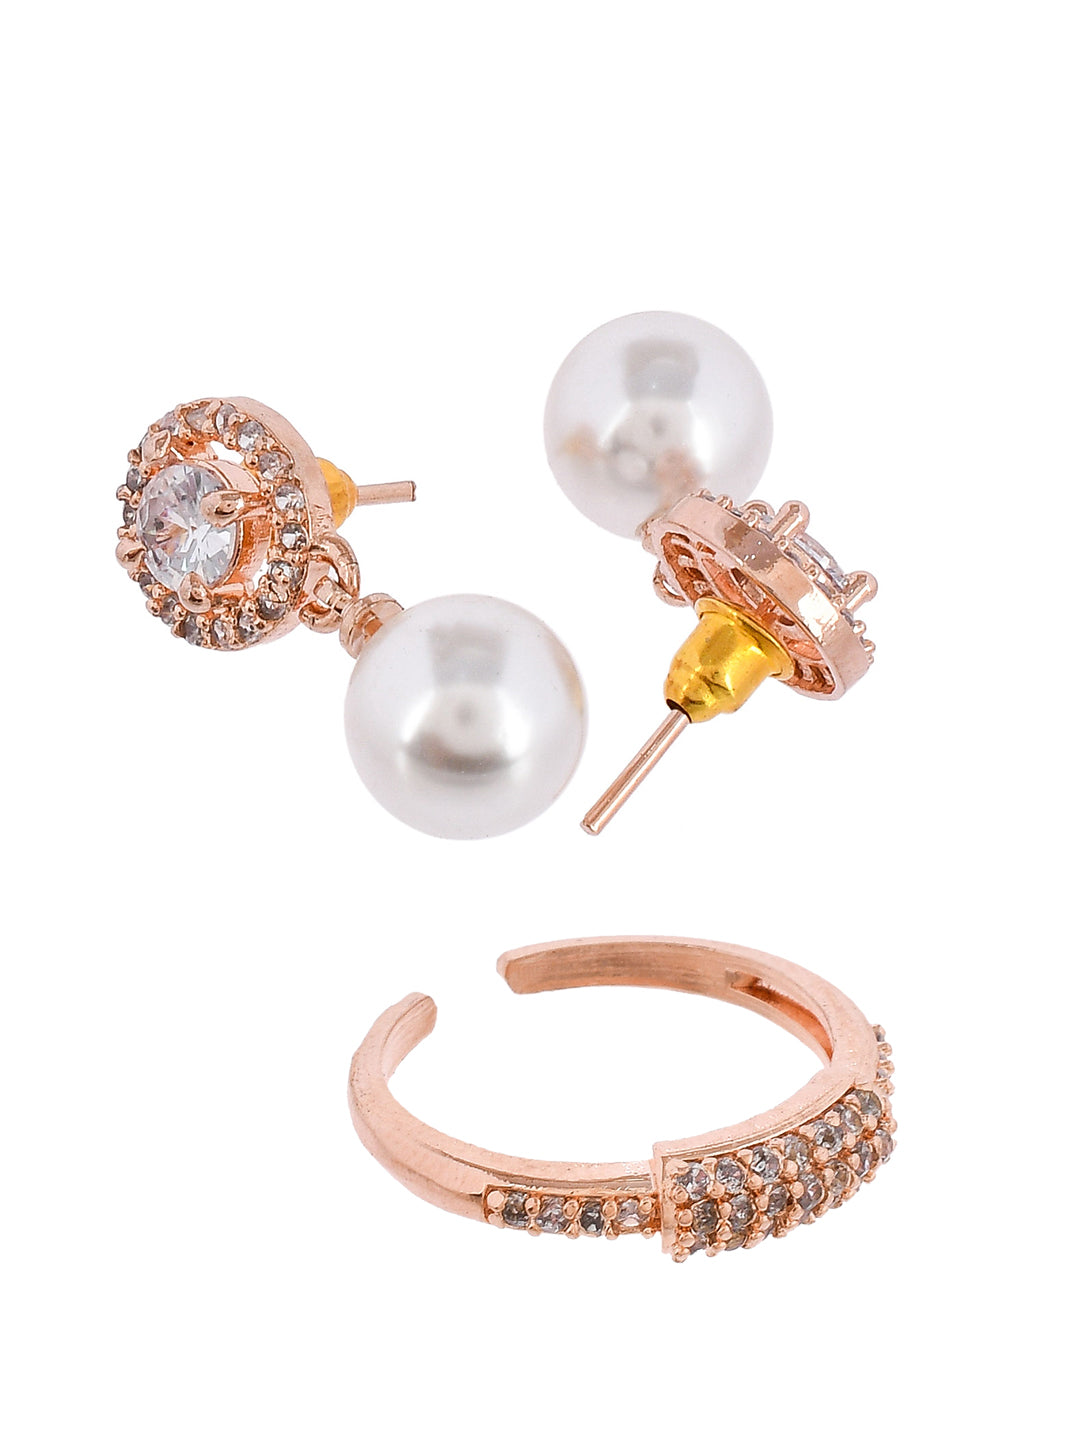 Rose Gold American Diamond Finger Ring with Earrings